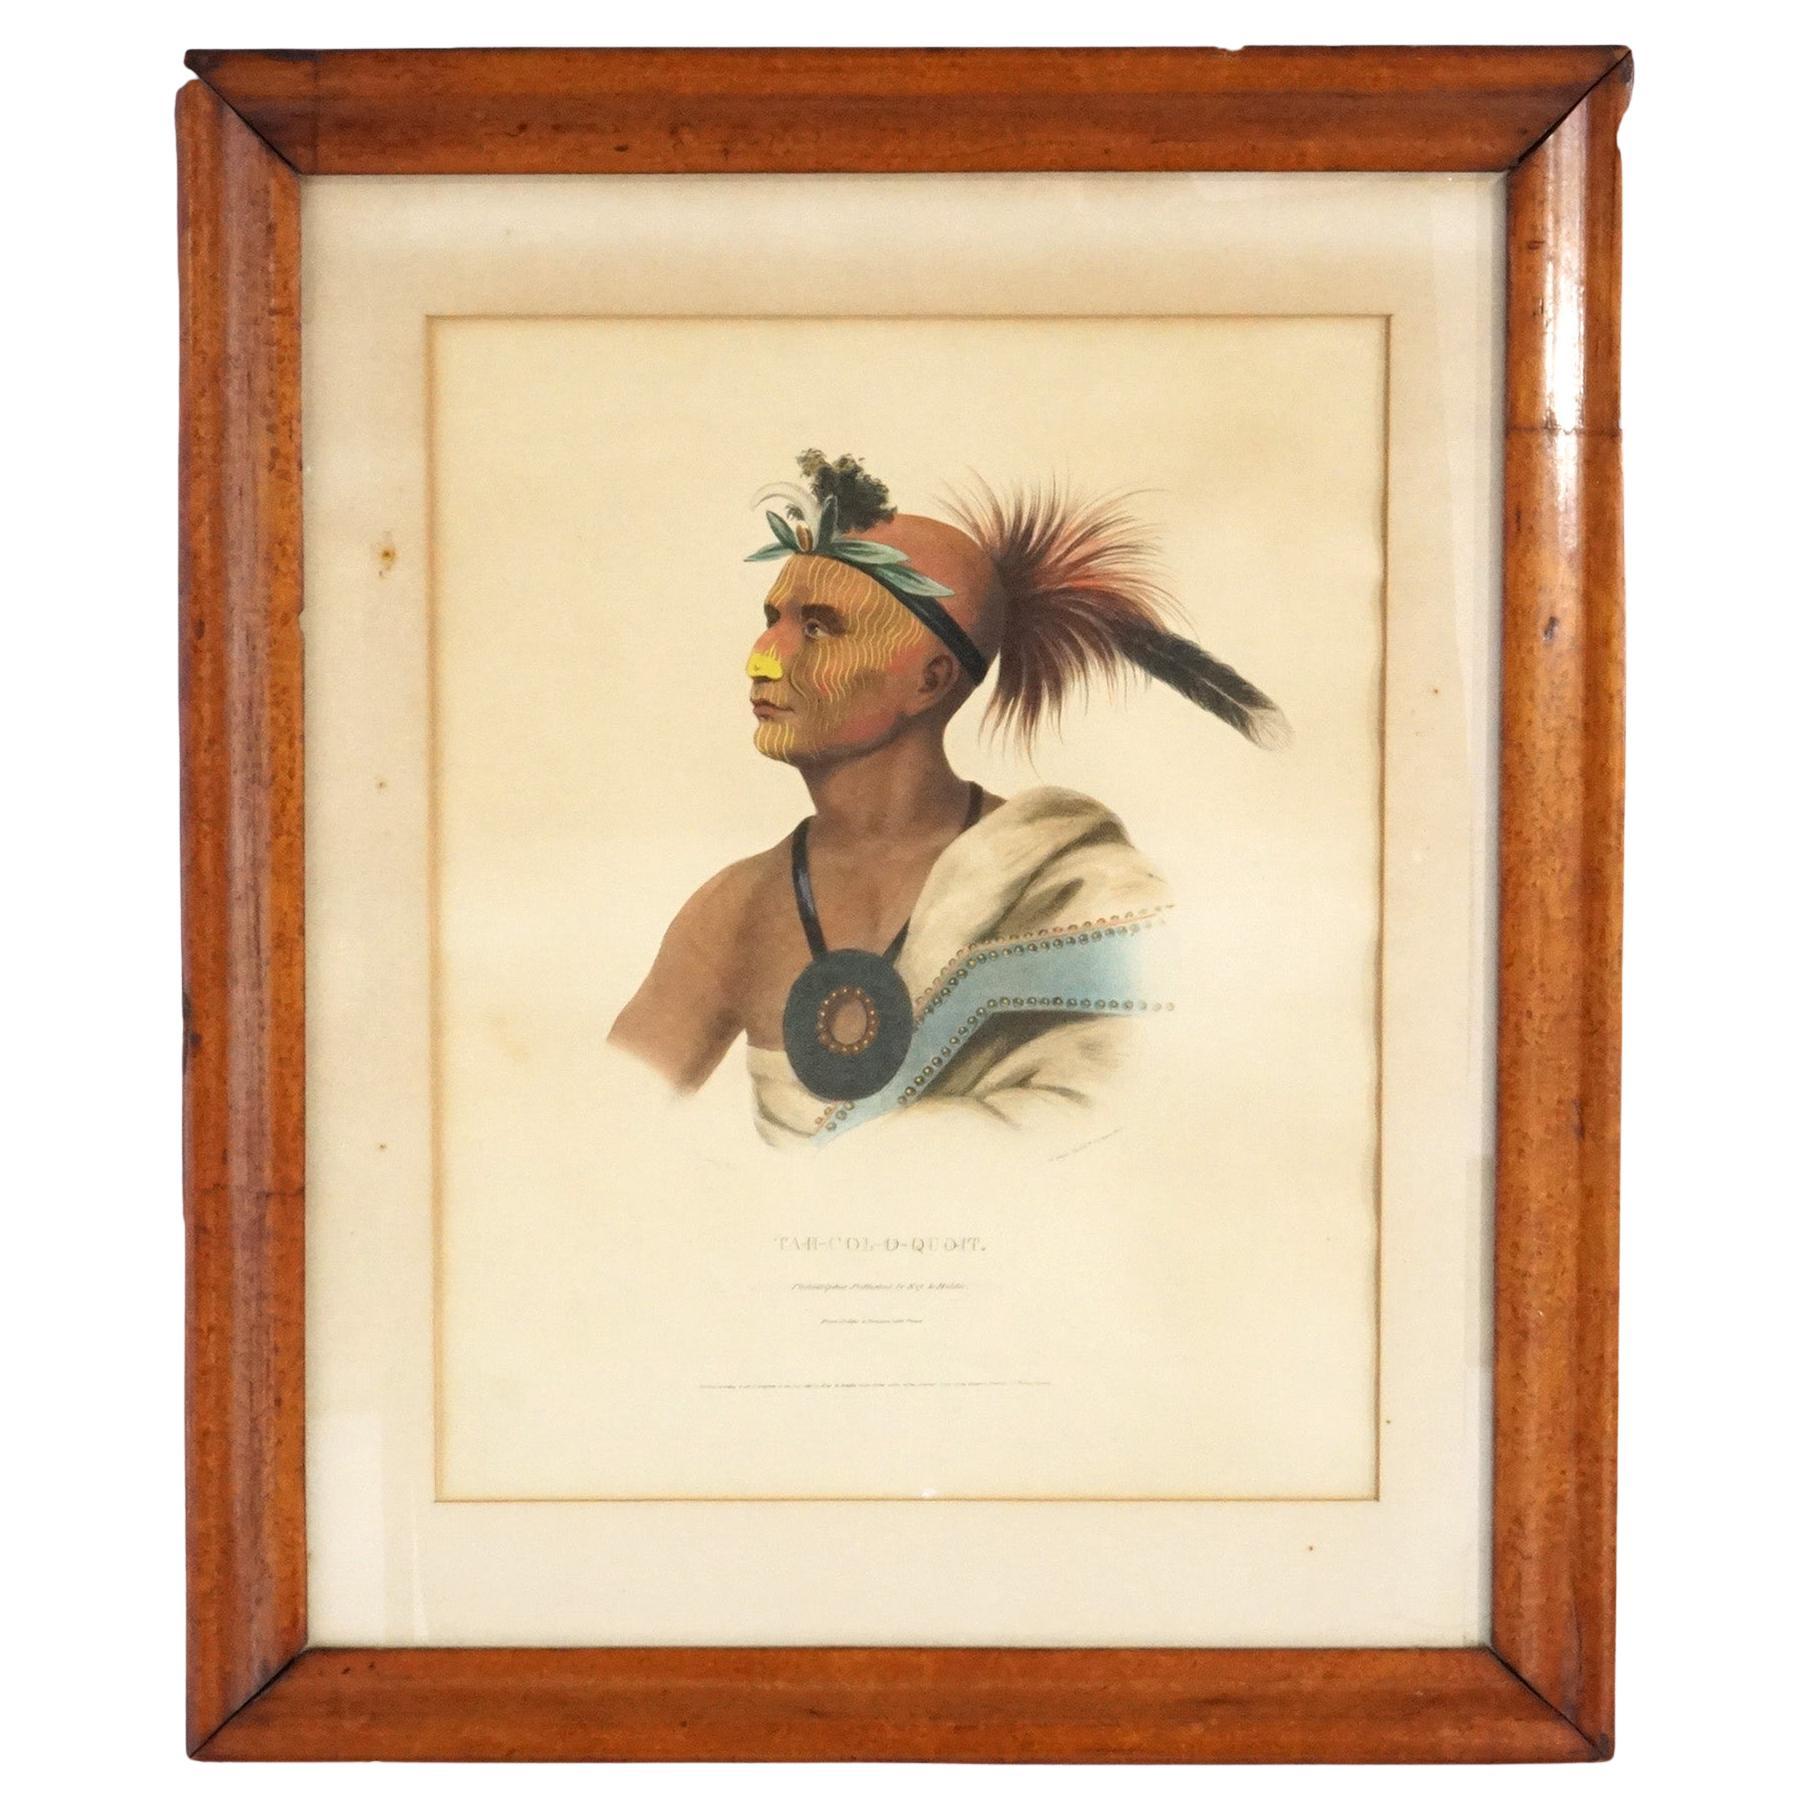 Antique American Indian Lithograph in Bird’sEye Maple Frame Philadelphia Publish